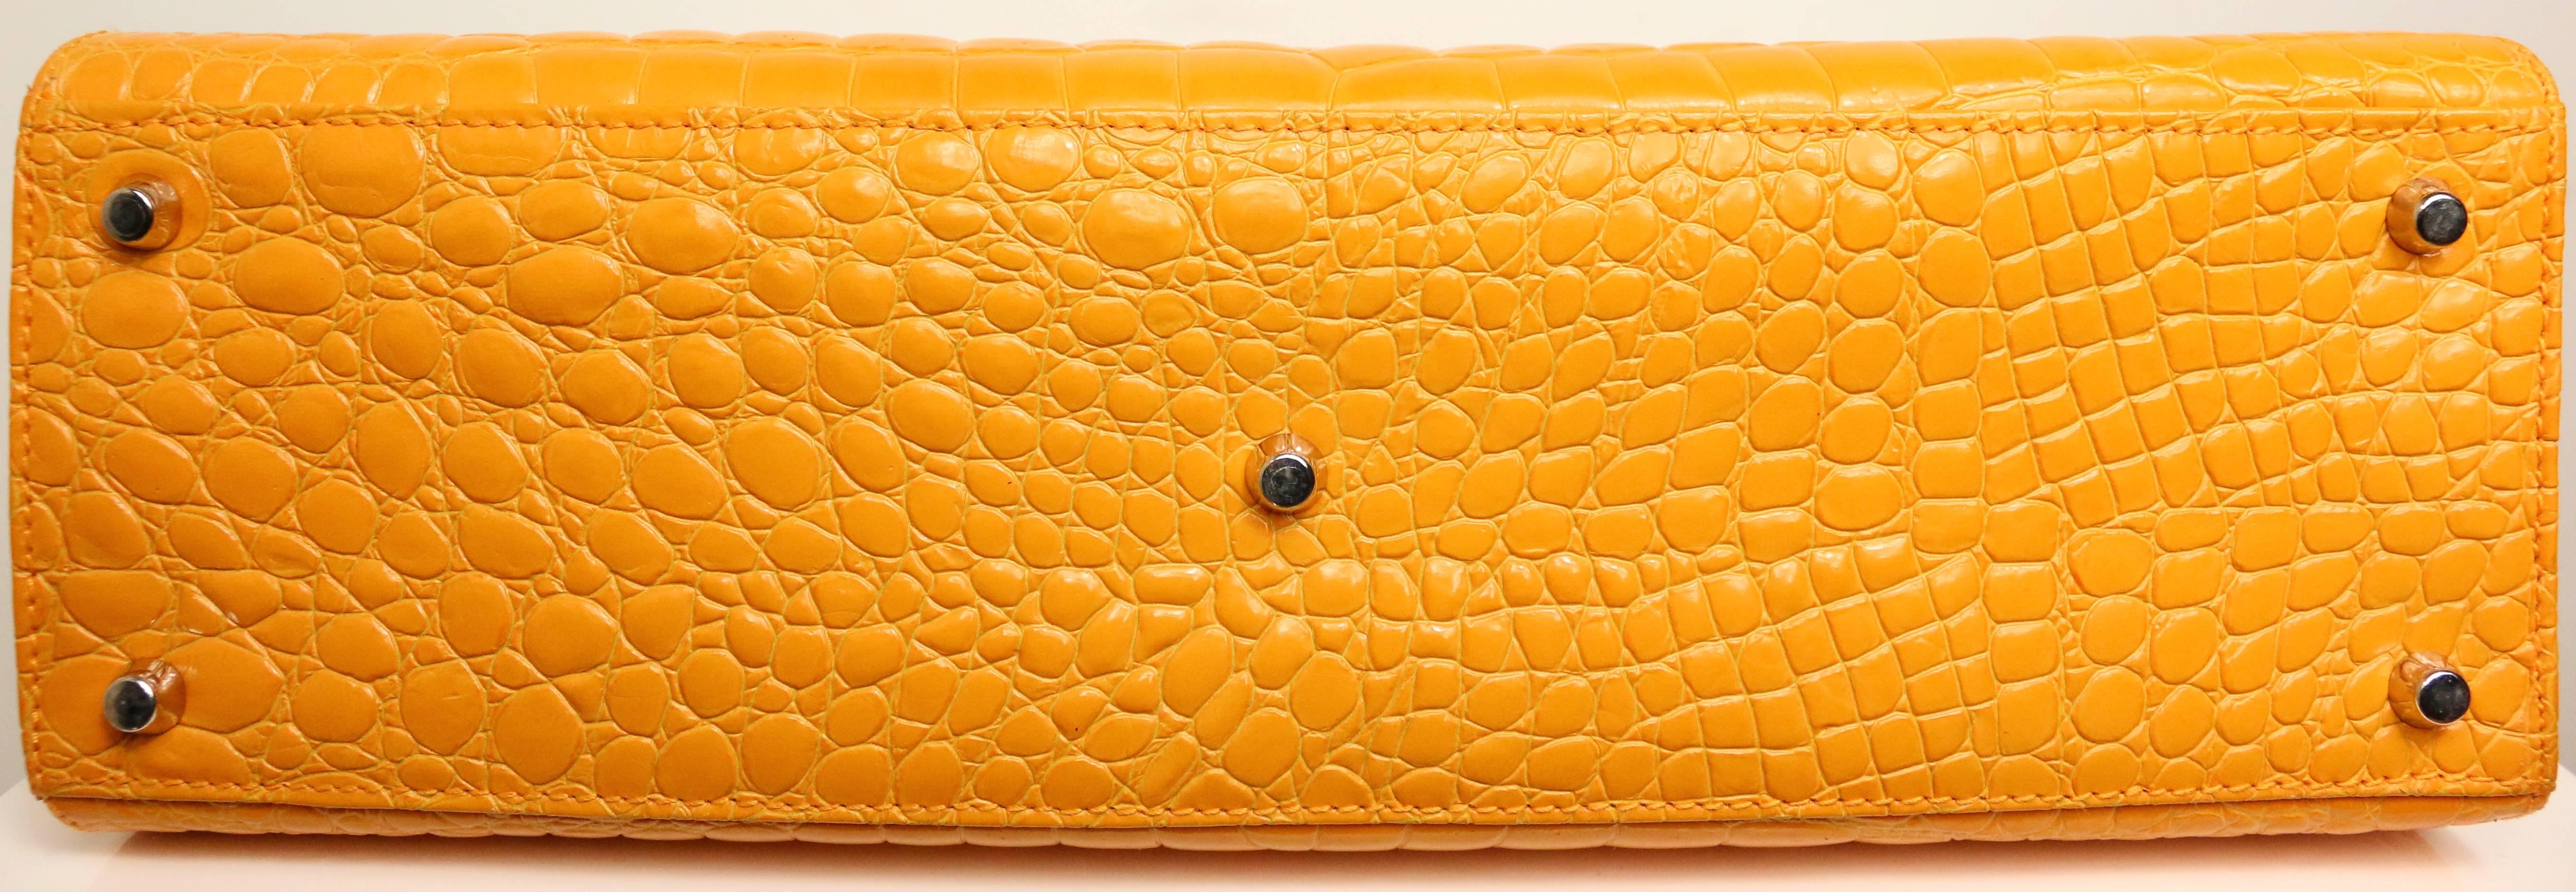 Gianni Versace Couture Orange Croc Embossed Enamel Leather Kelly Style Handbag 1